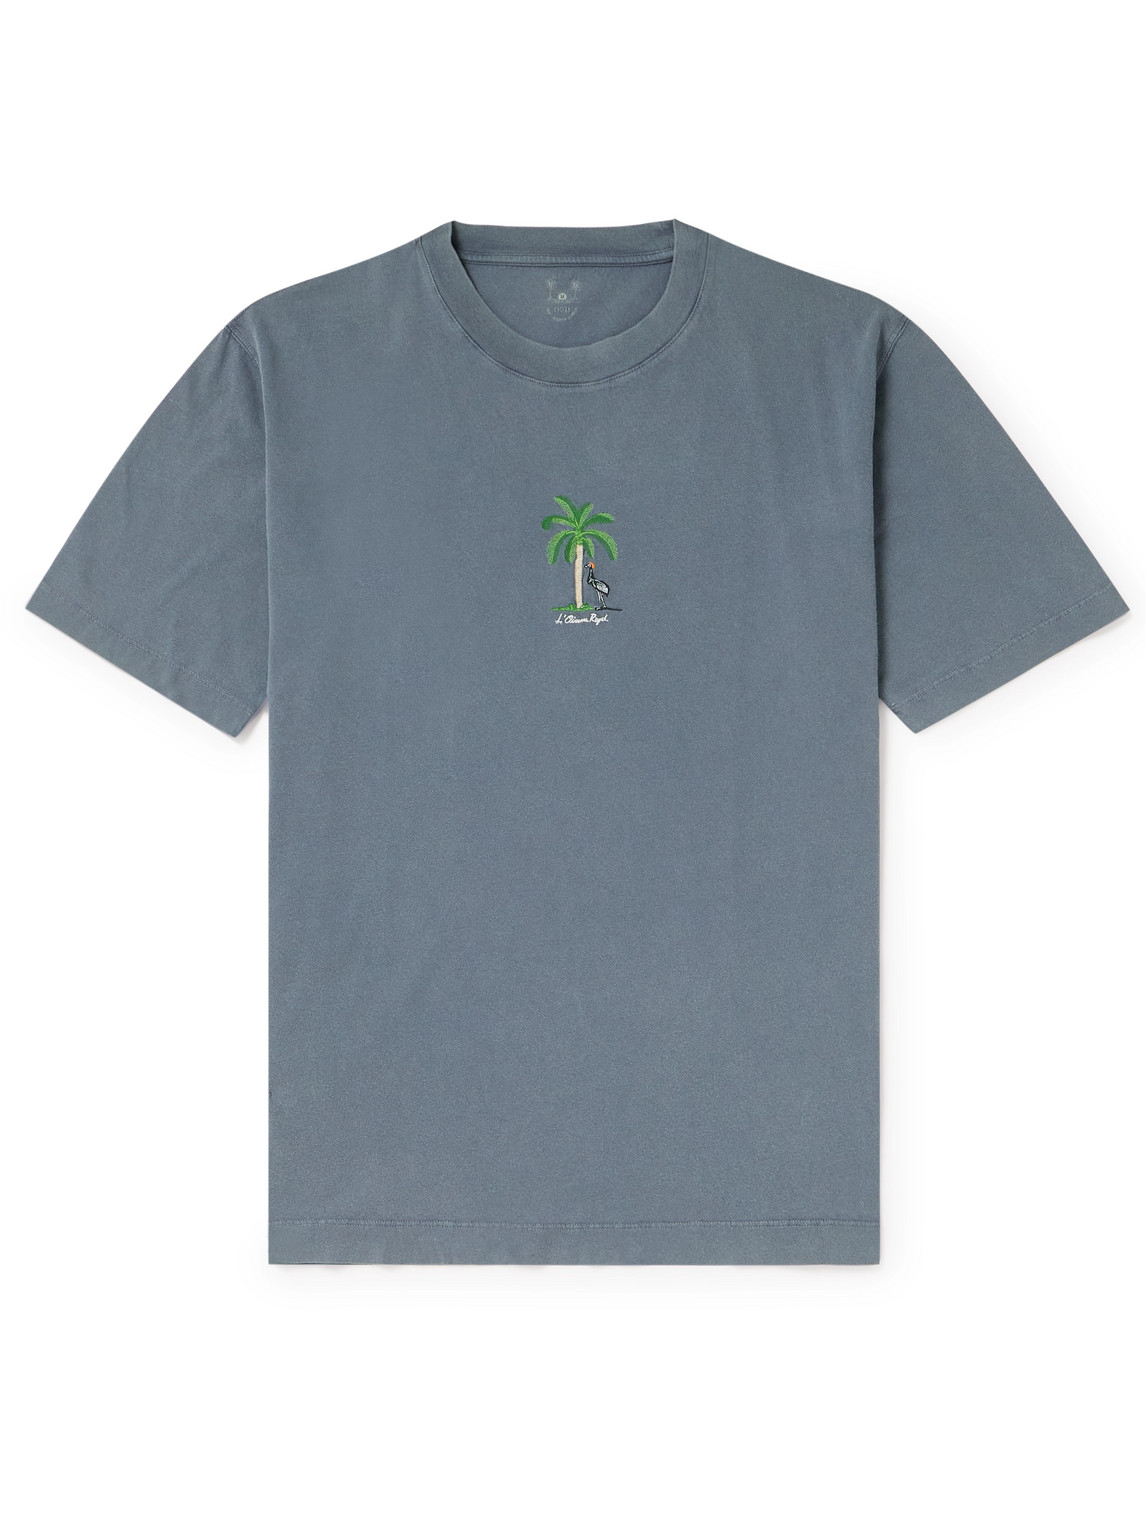 Desmond & Dempsey Embroidered Cotton-jersey Pyjama T-shirt In Gray